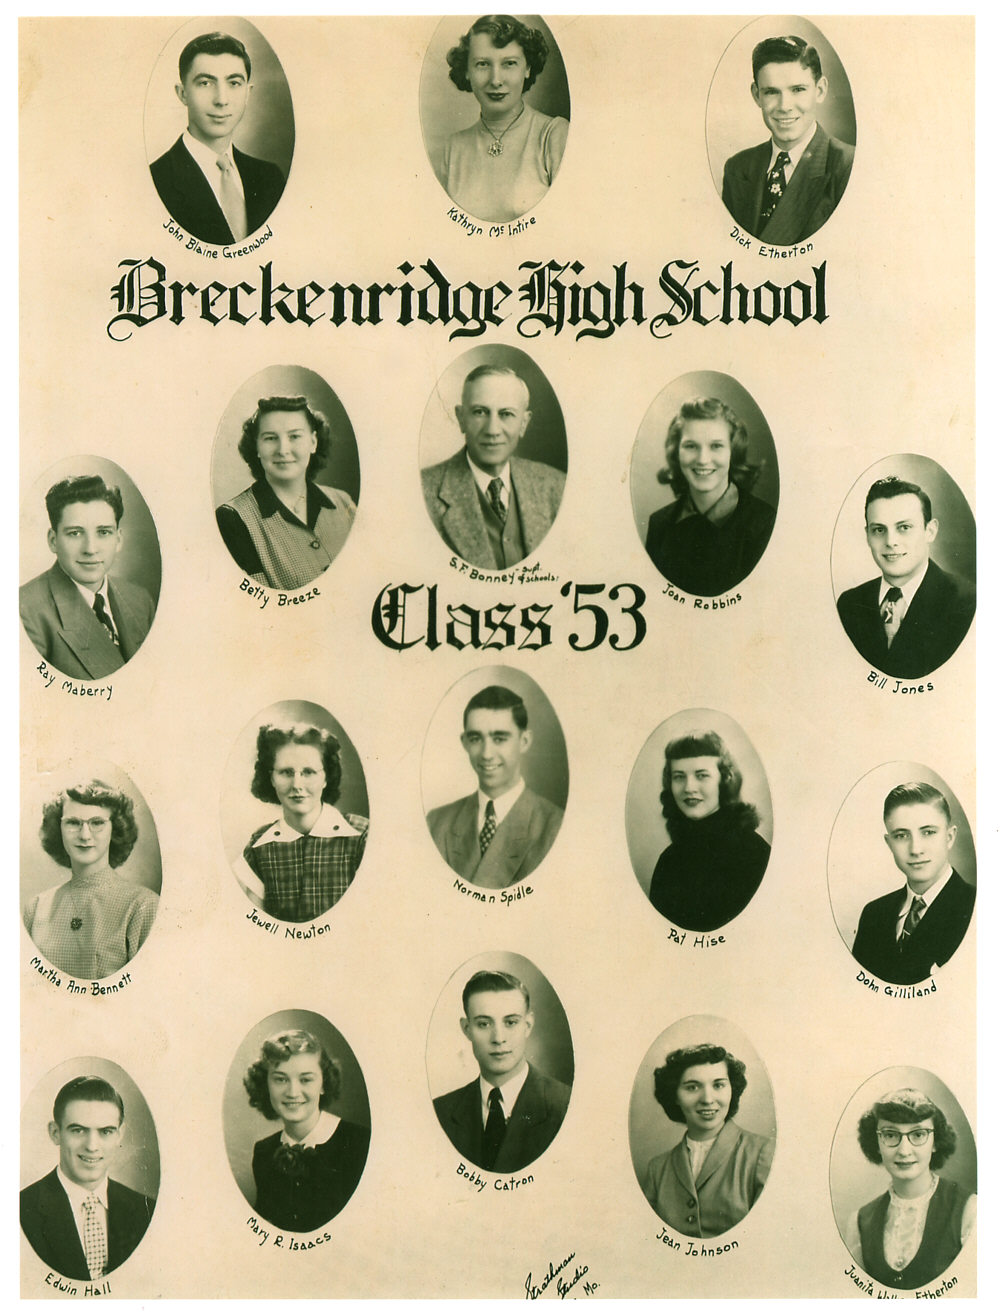 [Breckenridge High School 1953]